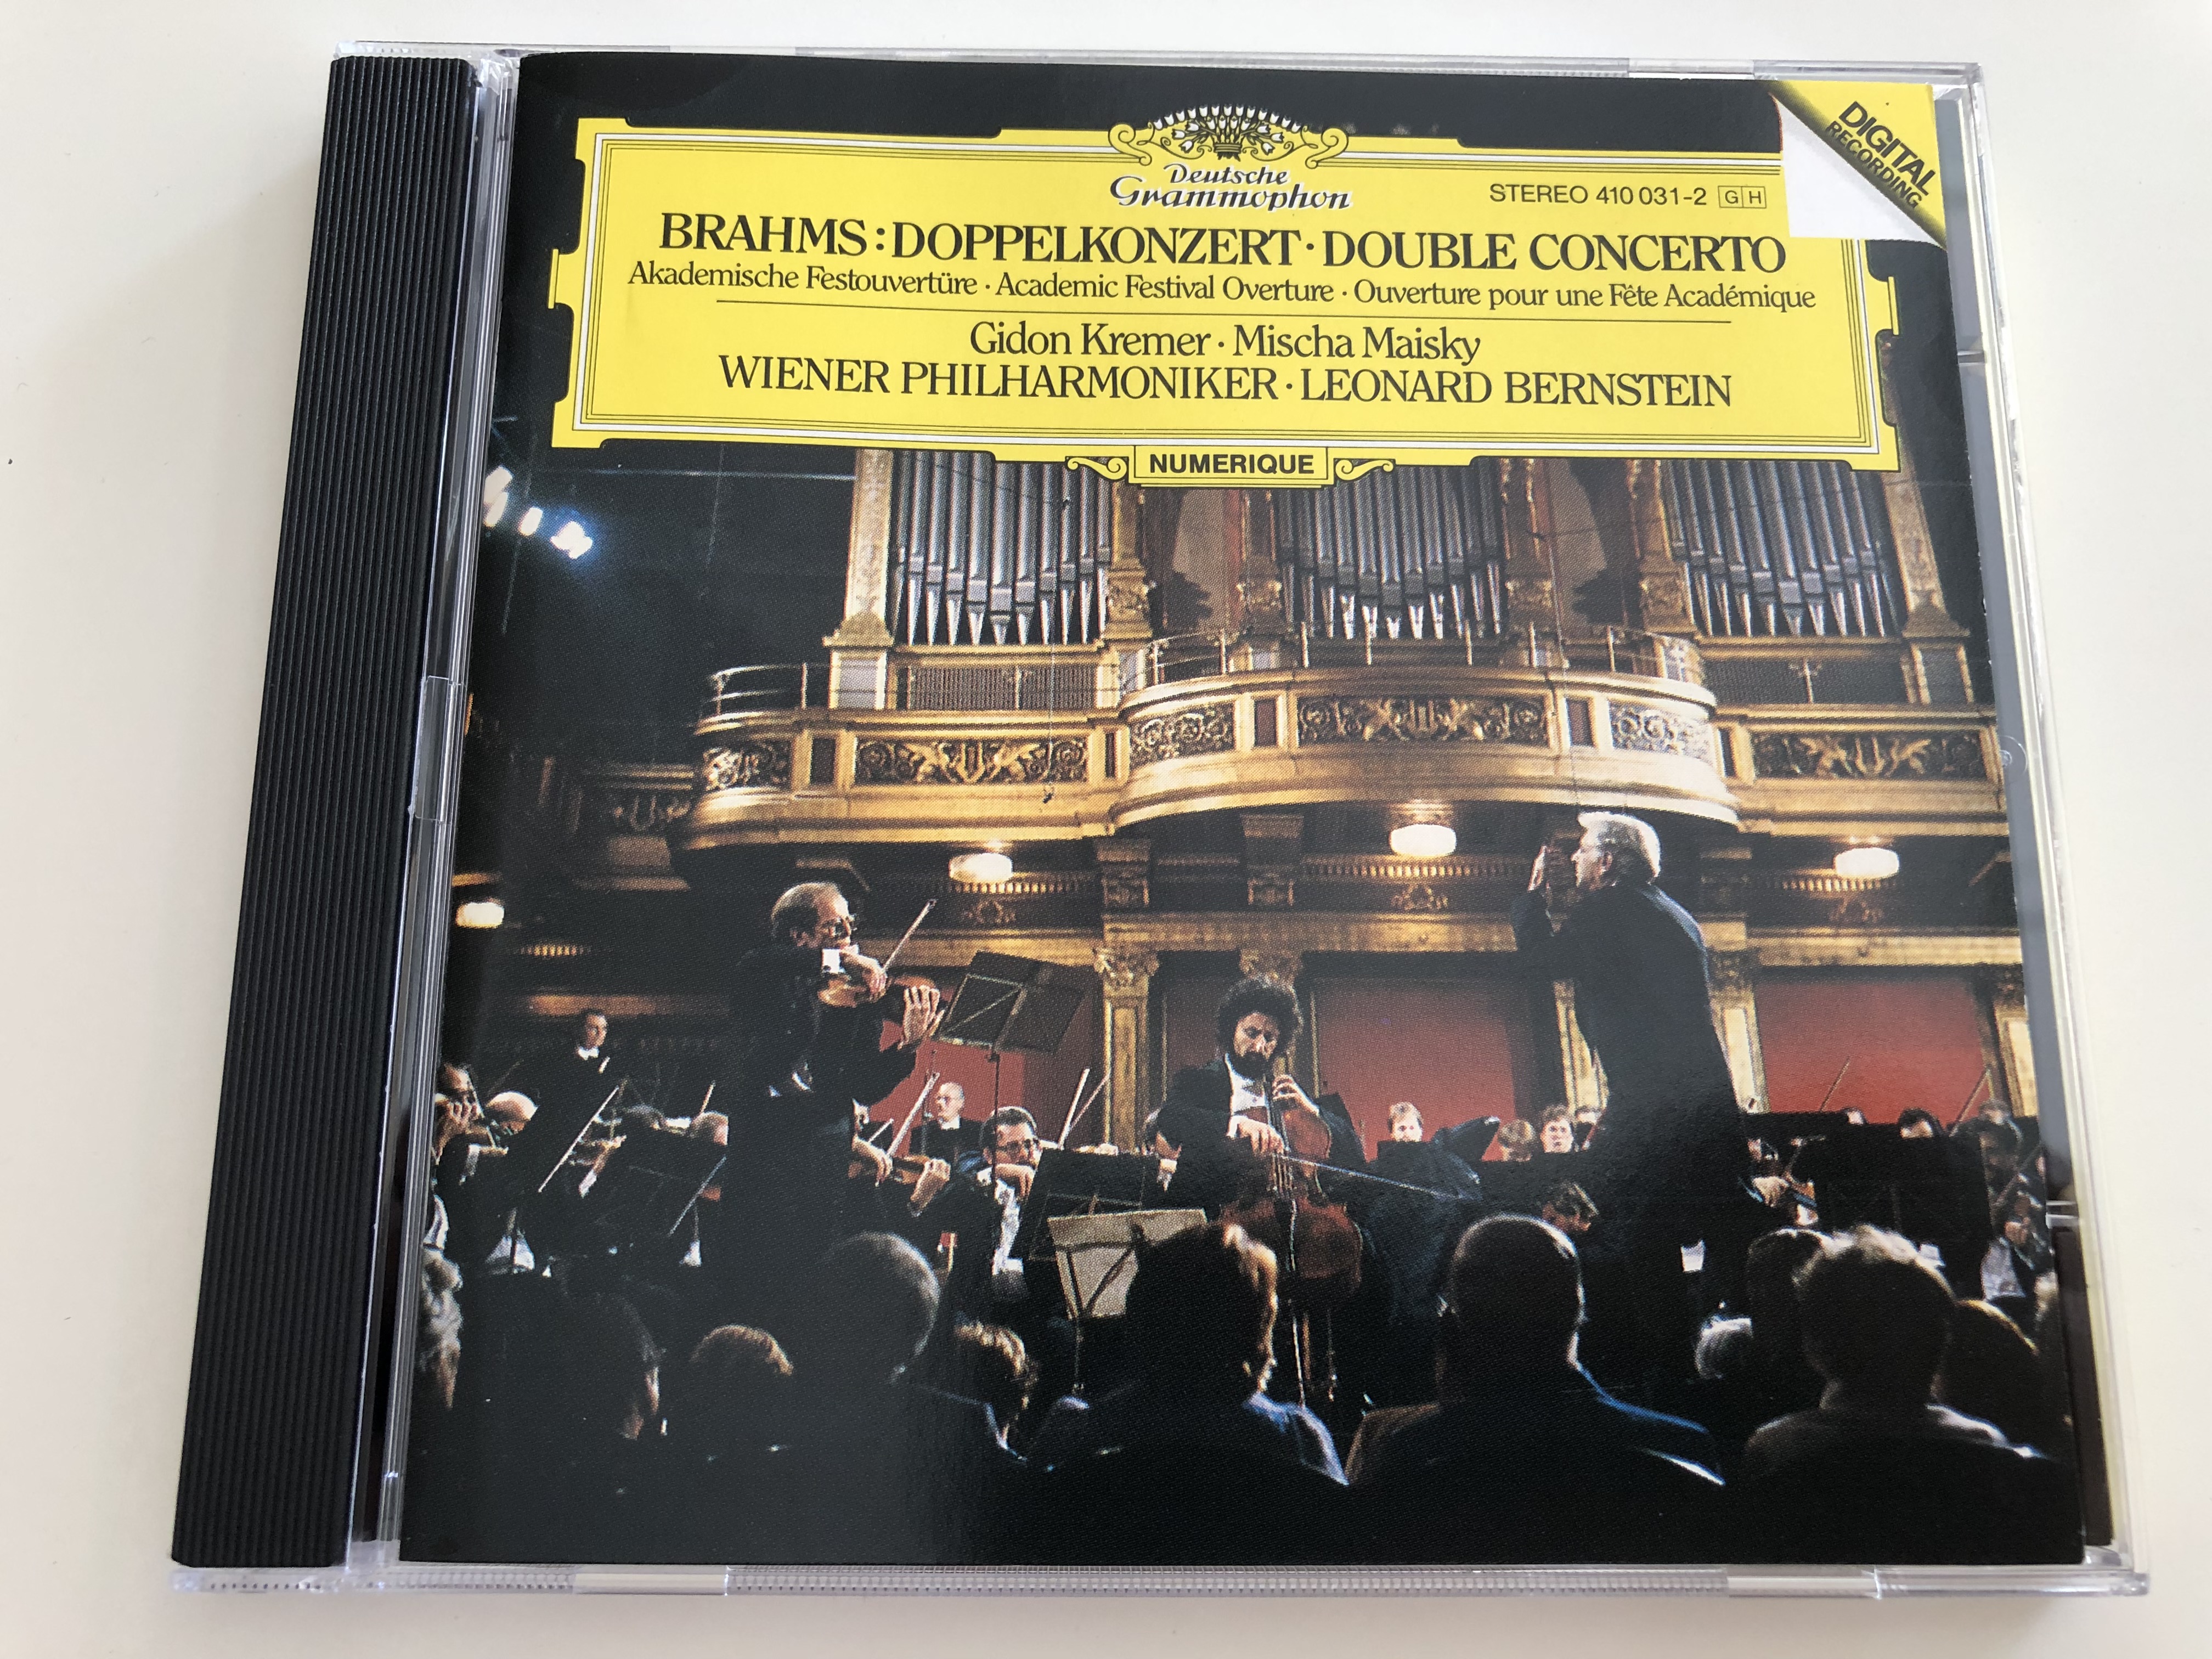 brahms-doppelkonzert-double-concerto-gidon-kremer-mischa-maisky-wiener-philharmoniker-conducted-by-leonard-bernstein-audio-cd-1983-1-.jpg